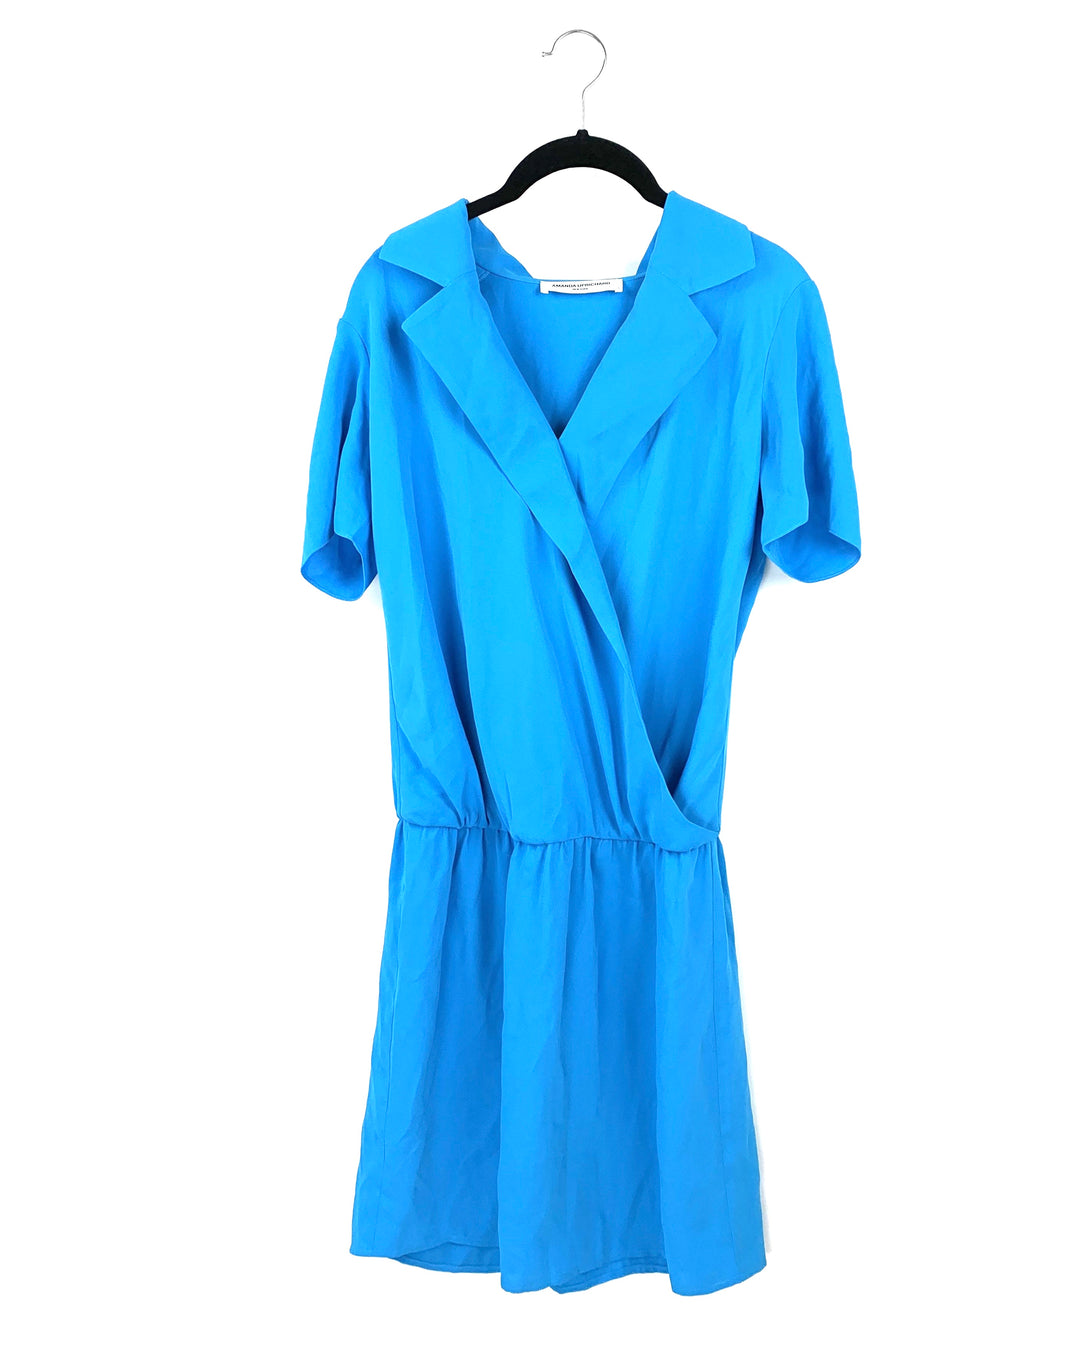 Blue Collar Dress - Small